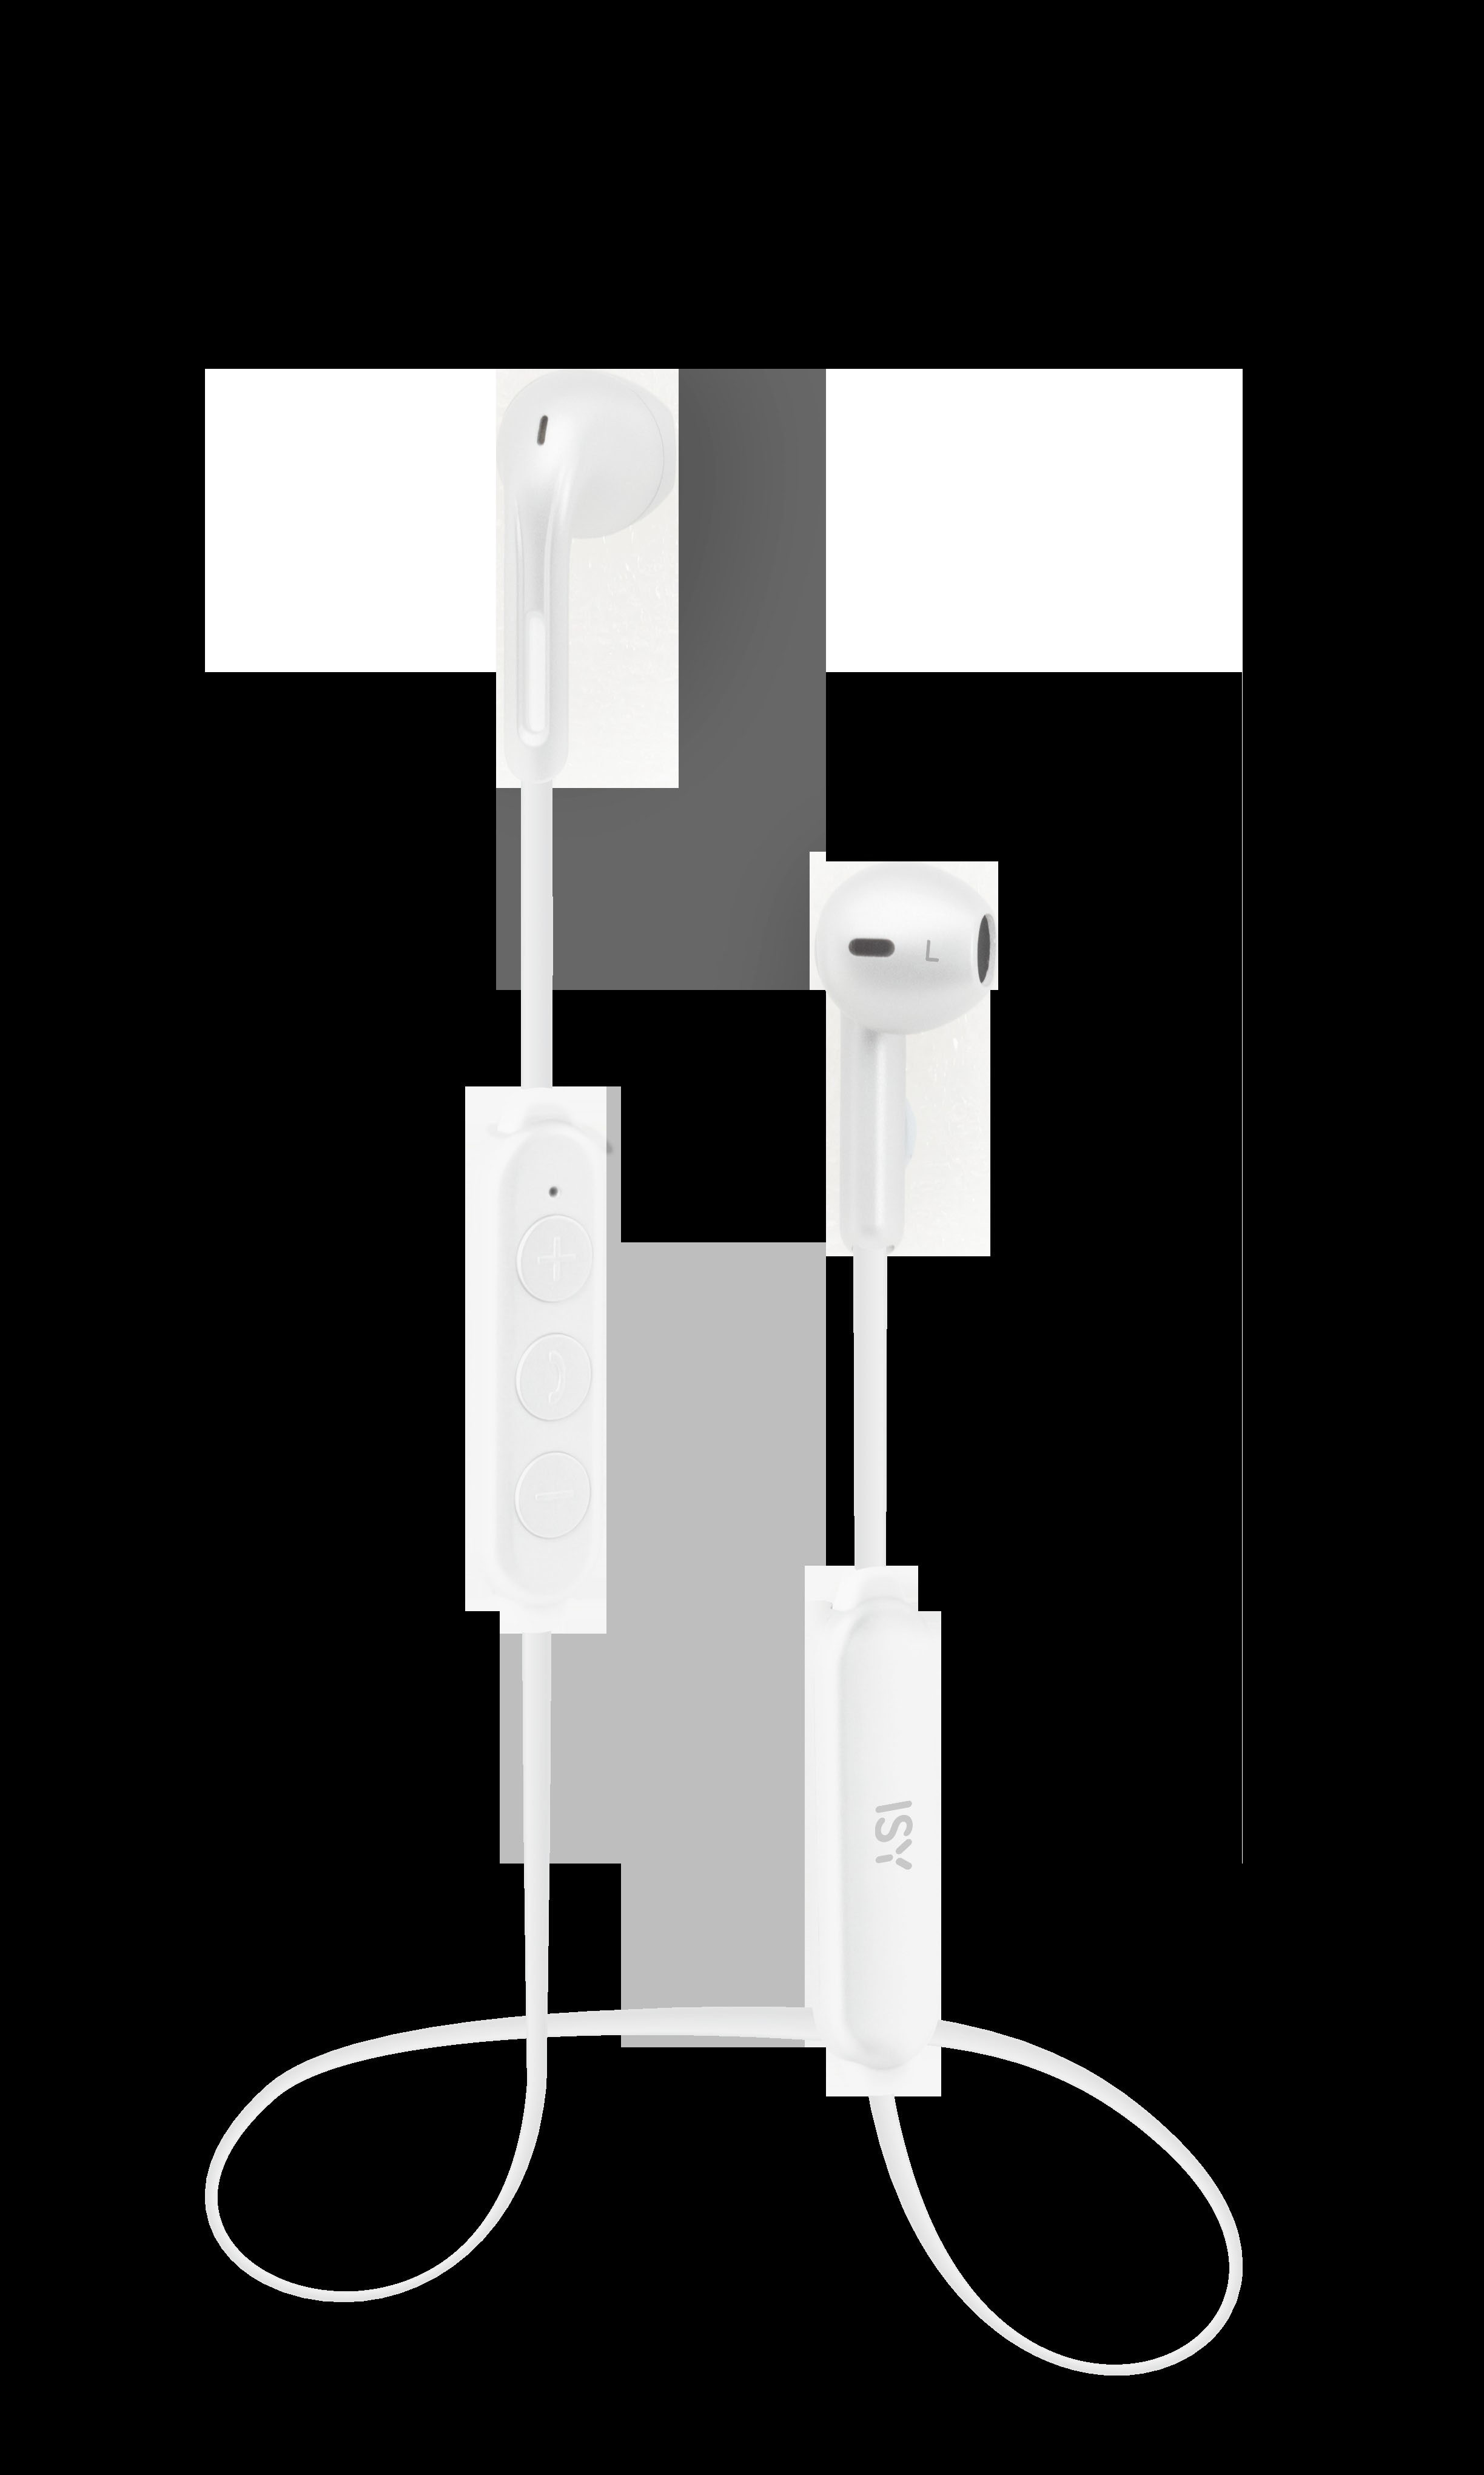 Kopfhörer Weiß ISY IBH-3700, In-ear